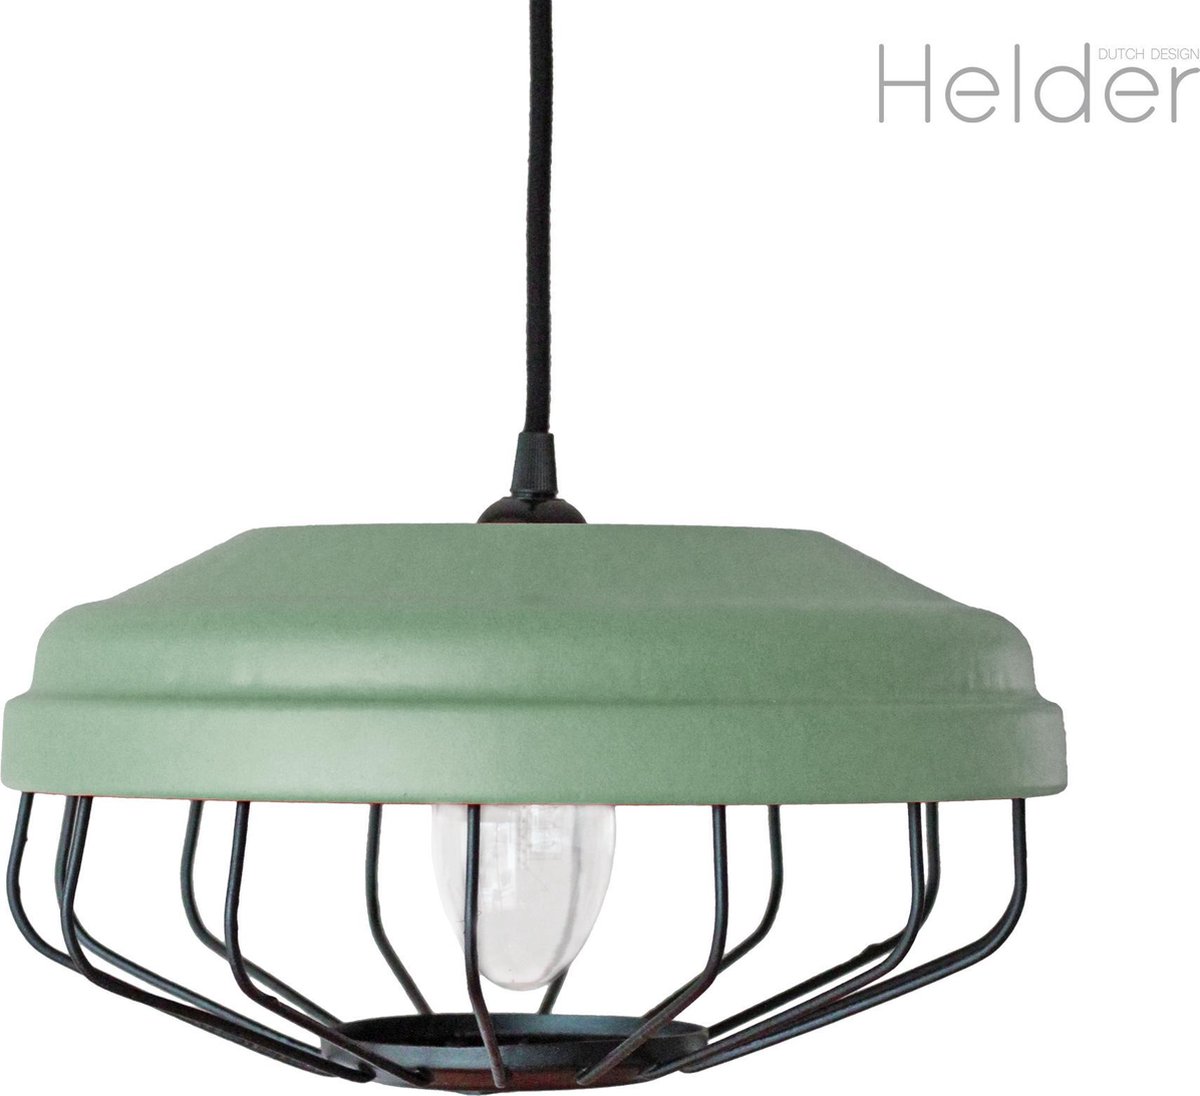 Helder Dutch Design - Hanglamp aquamarine / Limited edition